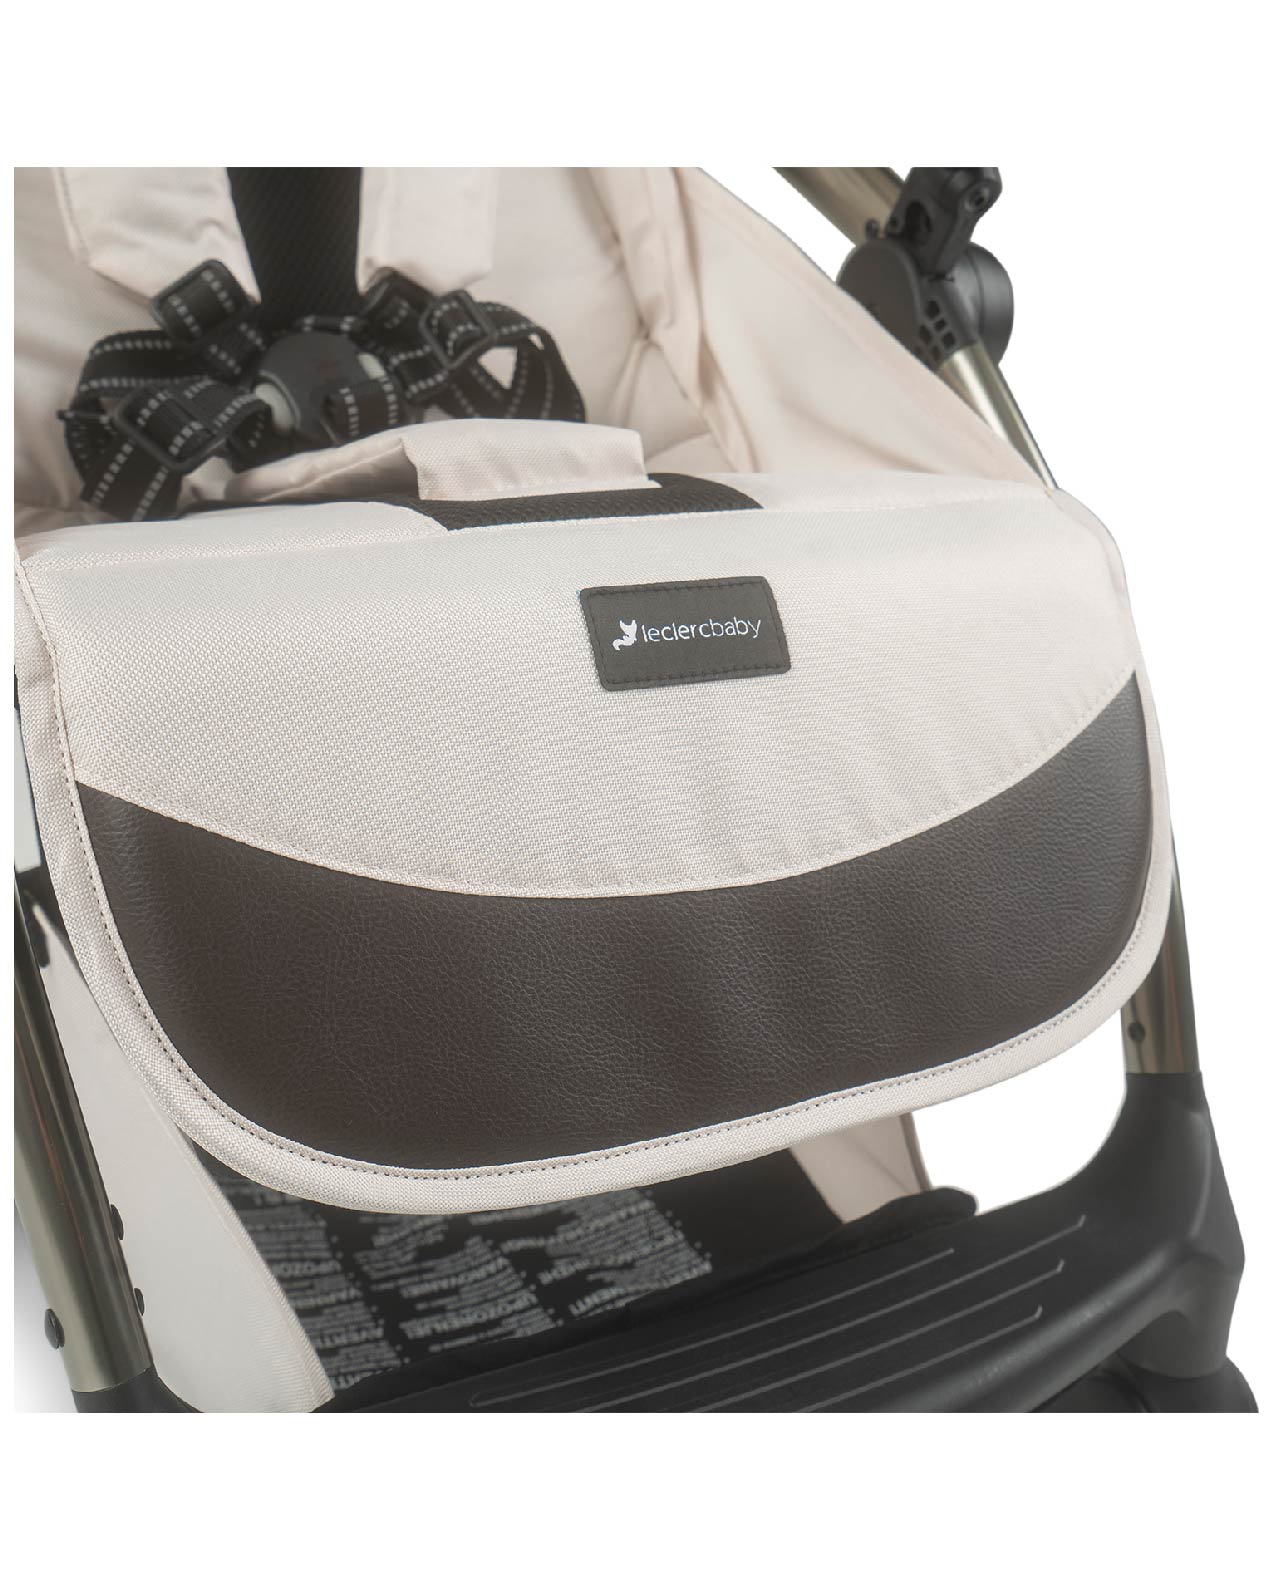 Influencer Air Twin Stroller Bundle : Cloudy Cream Stroller + Olive Green Stroller